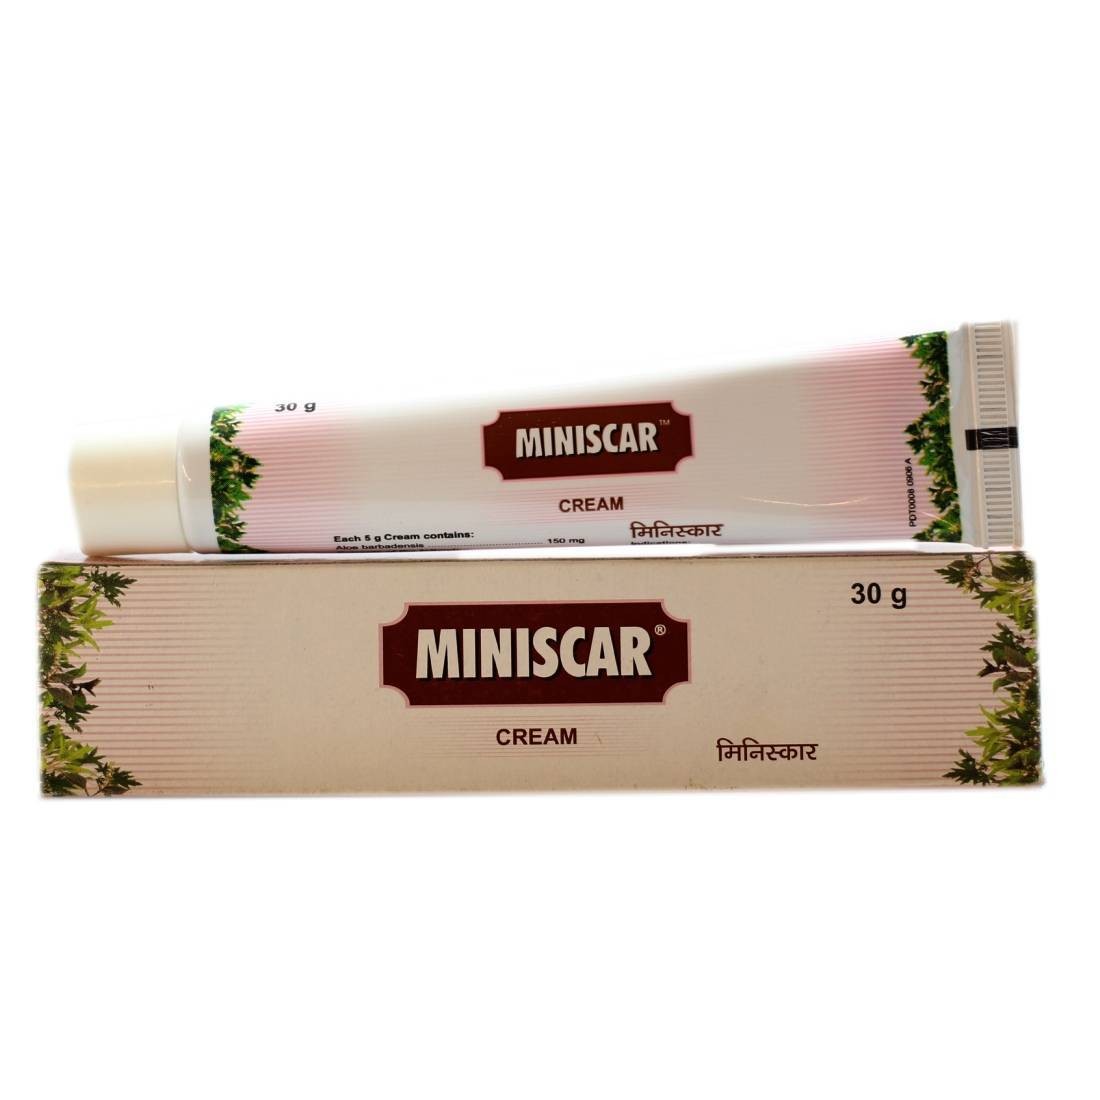 10 % Off Charak Miniscar Cream